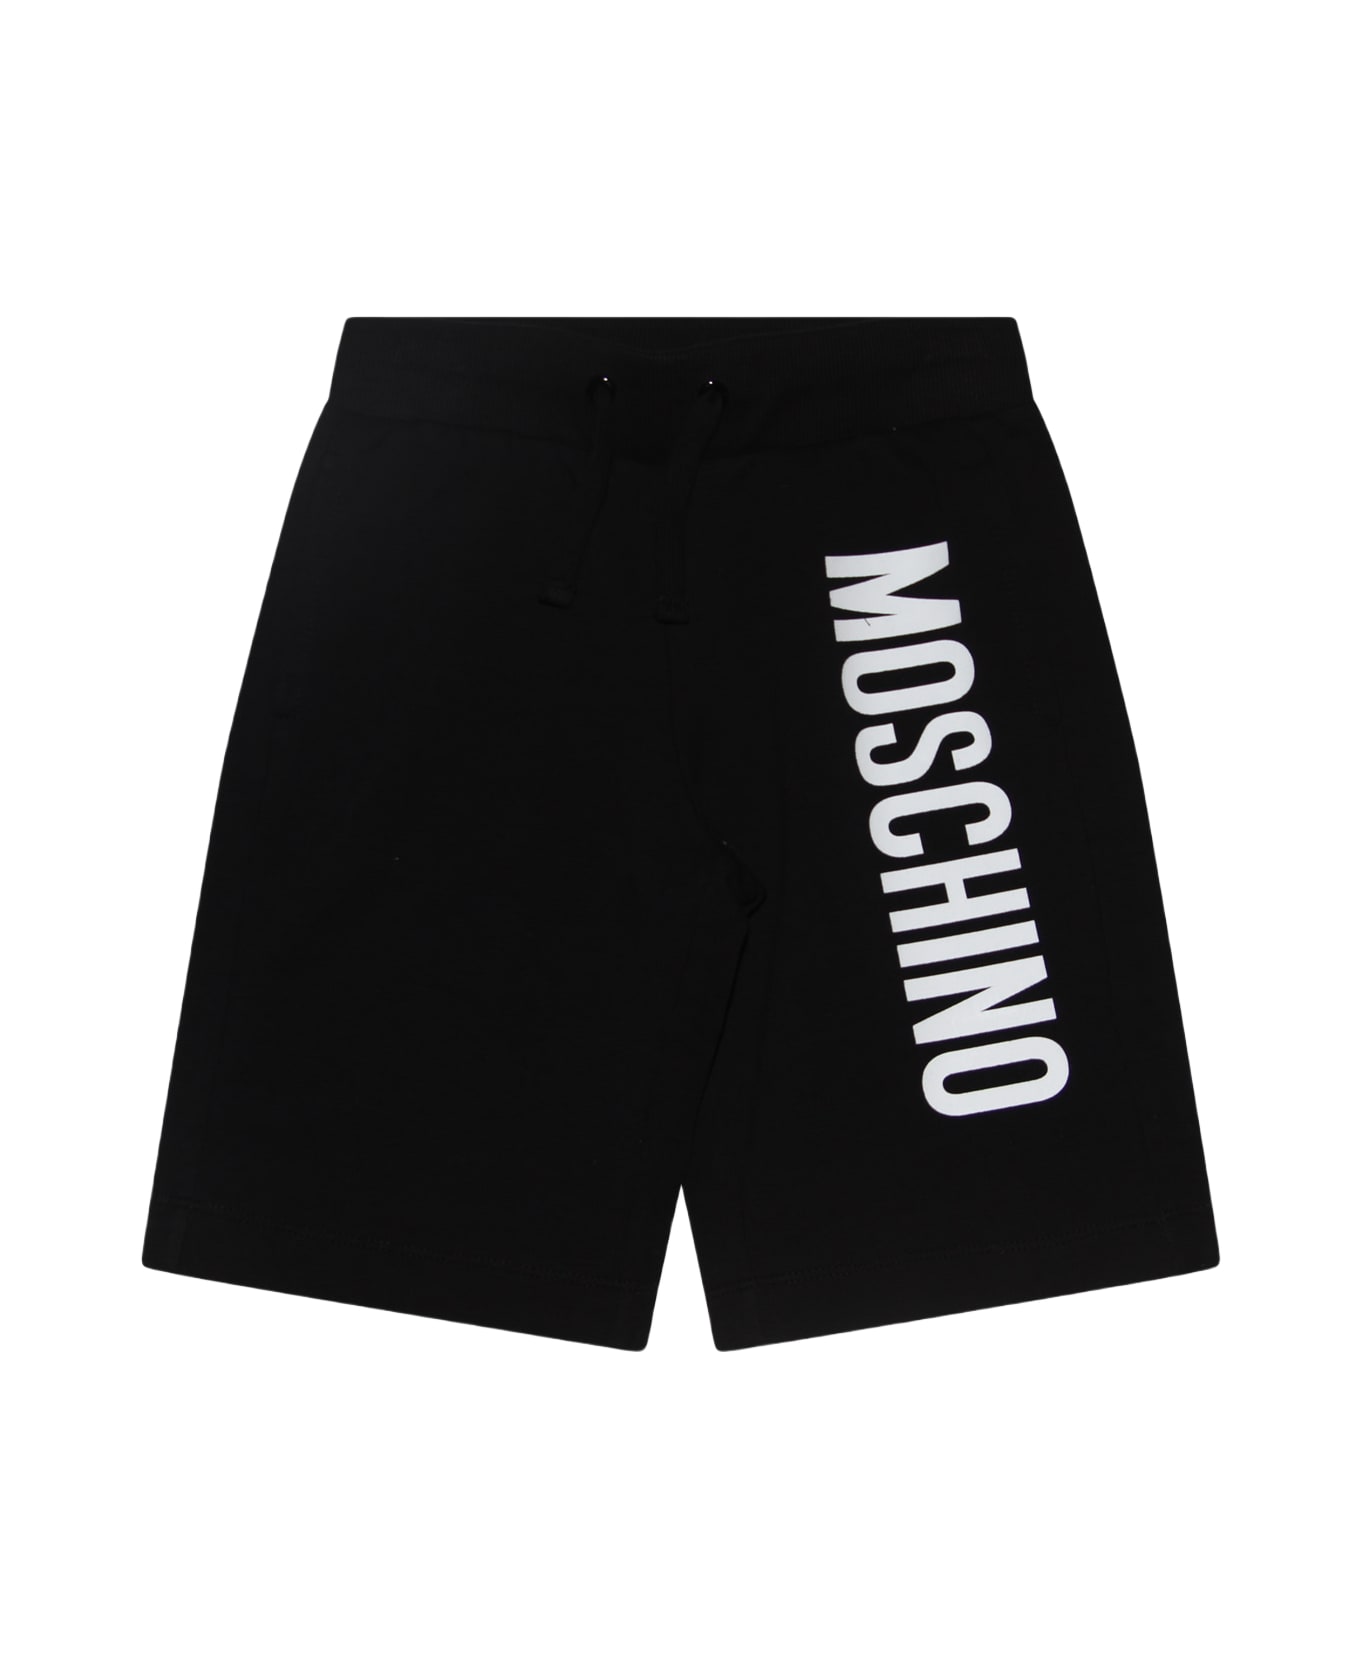 Moschino Black And White Cotton Blend Track Shorts - Nero